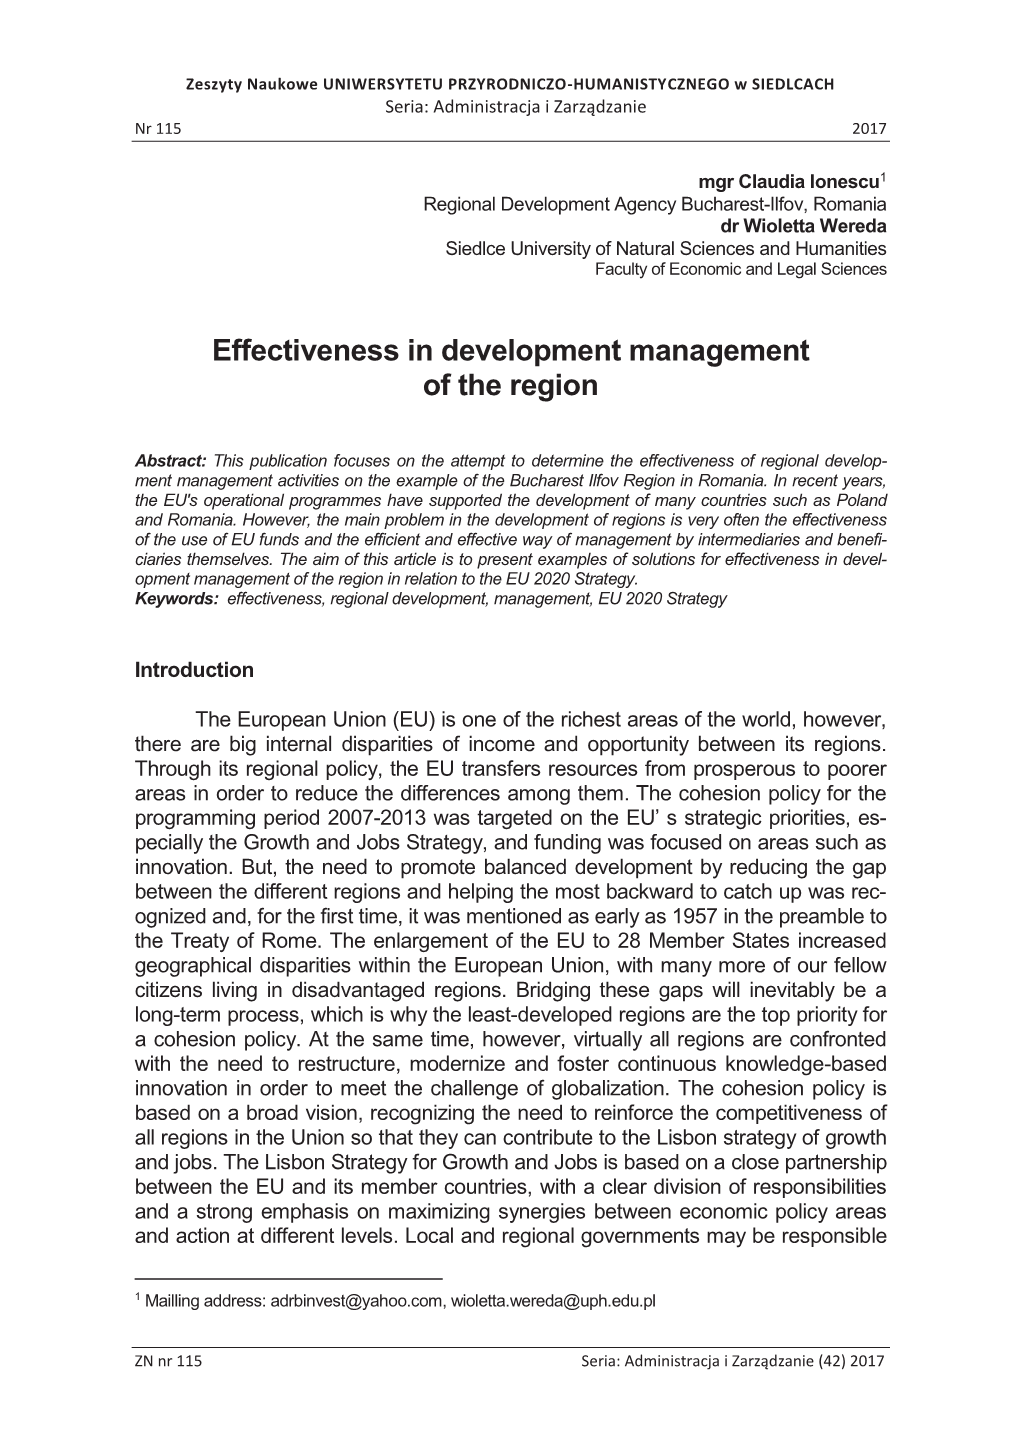 Effectiveness in Development Management of the Region